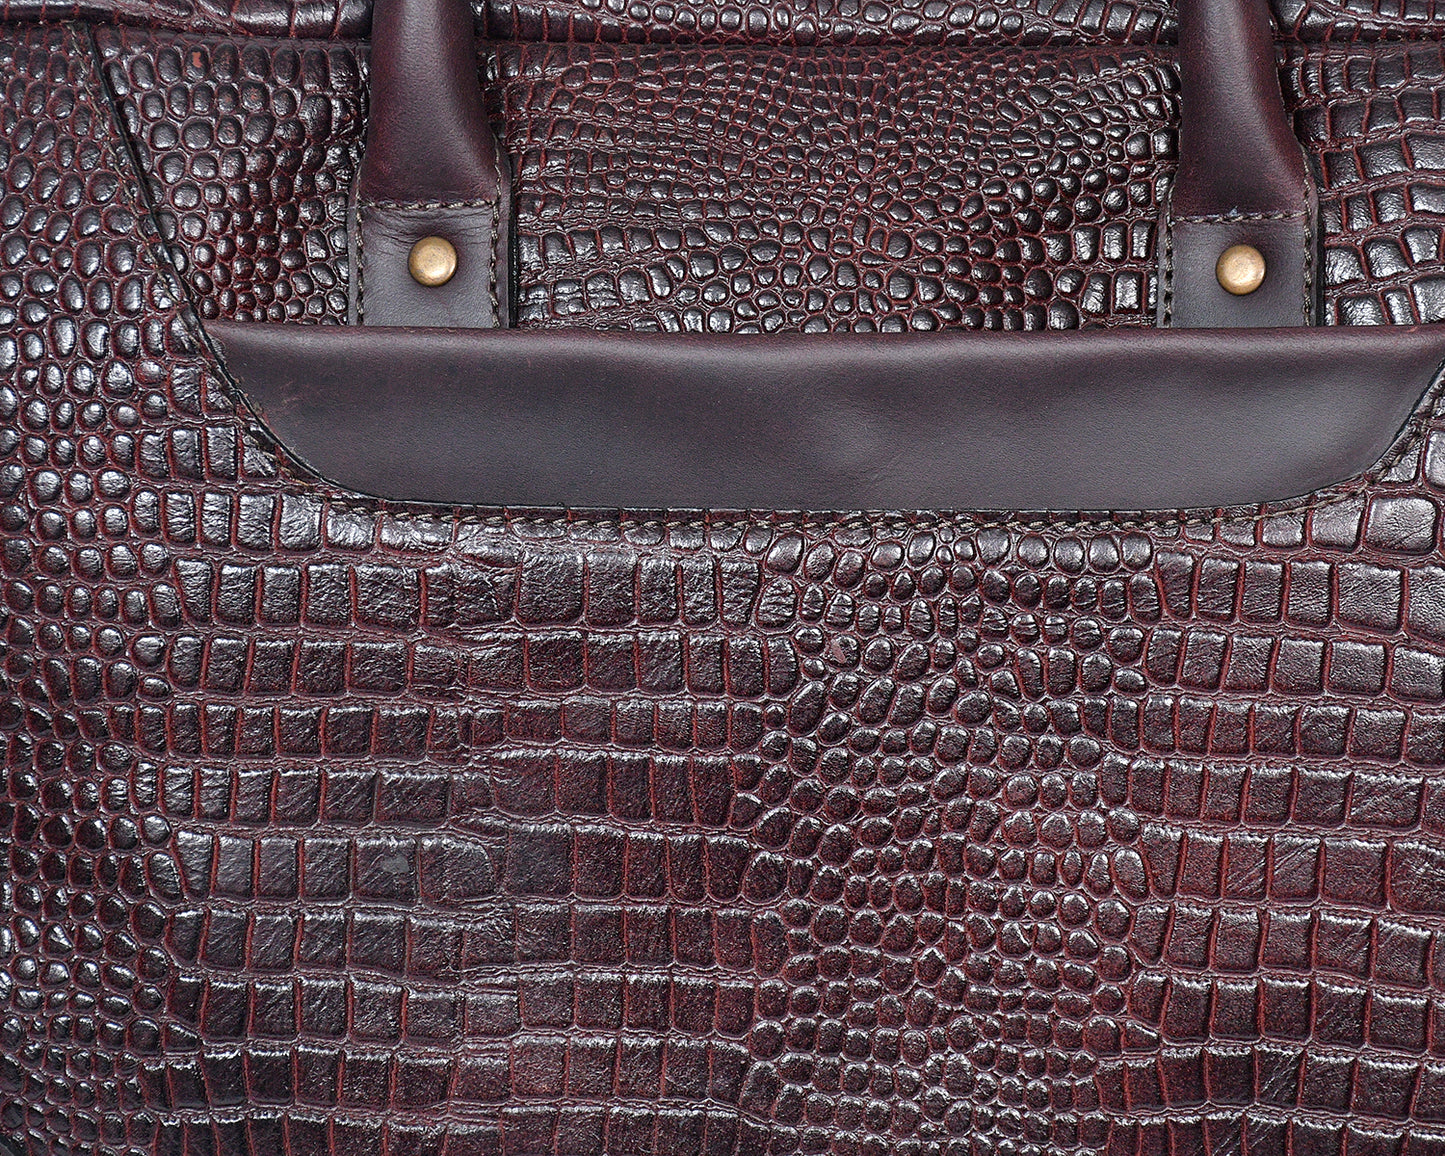 Timeless Elegance: Croco Leather Messenger Bag for Fashion-Forward Individuals. - CELTICINDIA